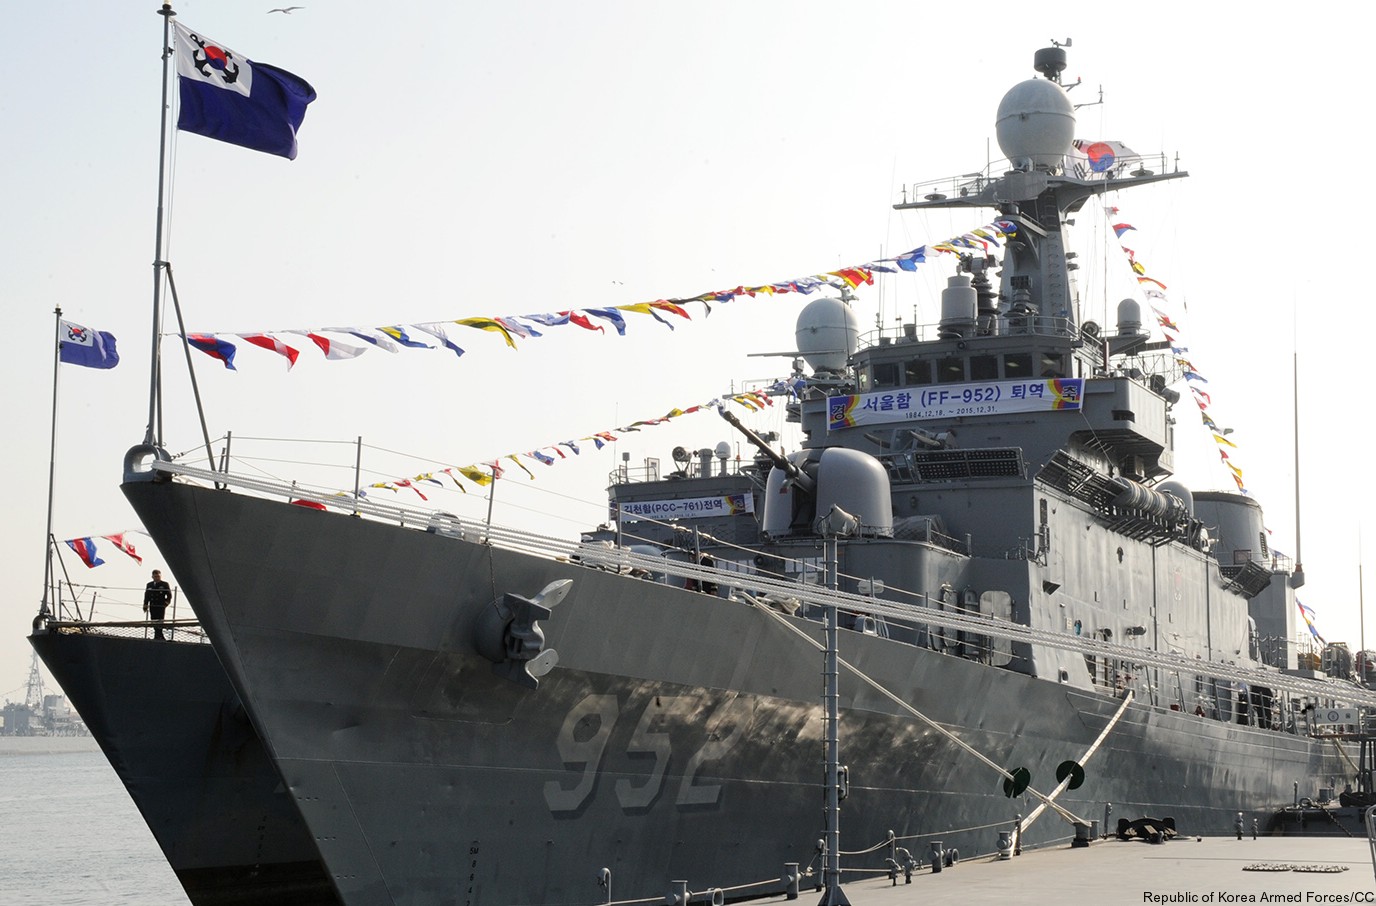 ff-952 roks seoul ulsan class frigate republic of korea navy rokn 04